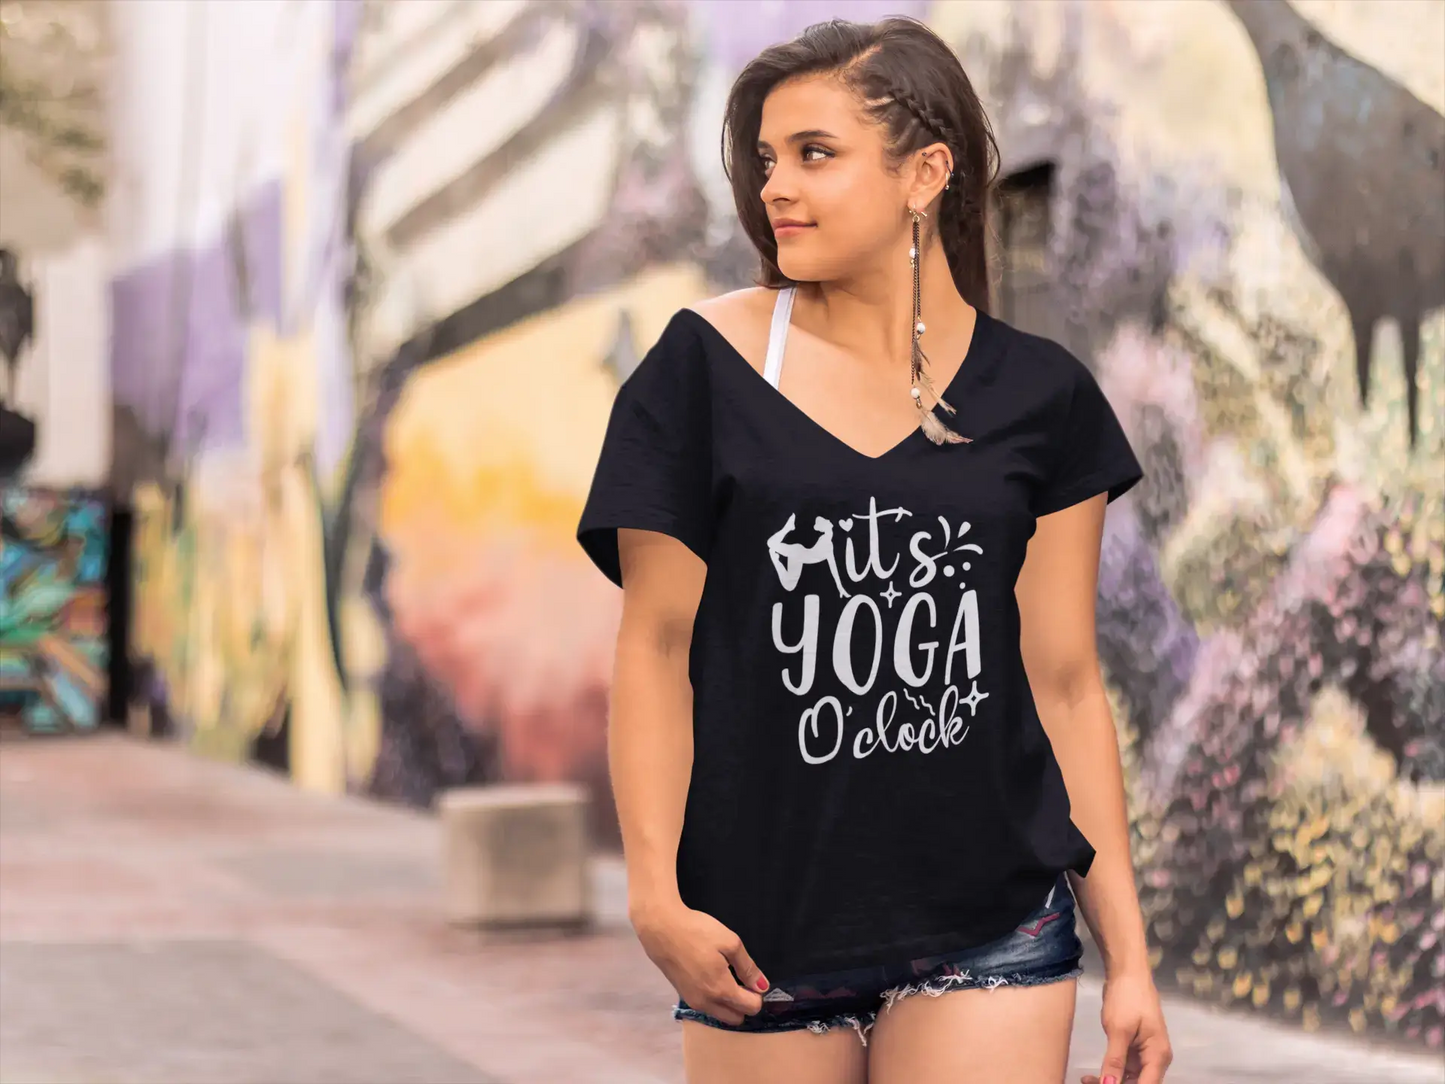 ULTRABASIC Women's T-Shirt It's Yoga O'clock - Funny Vintage Tee Shirt